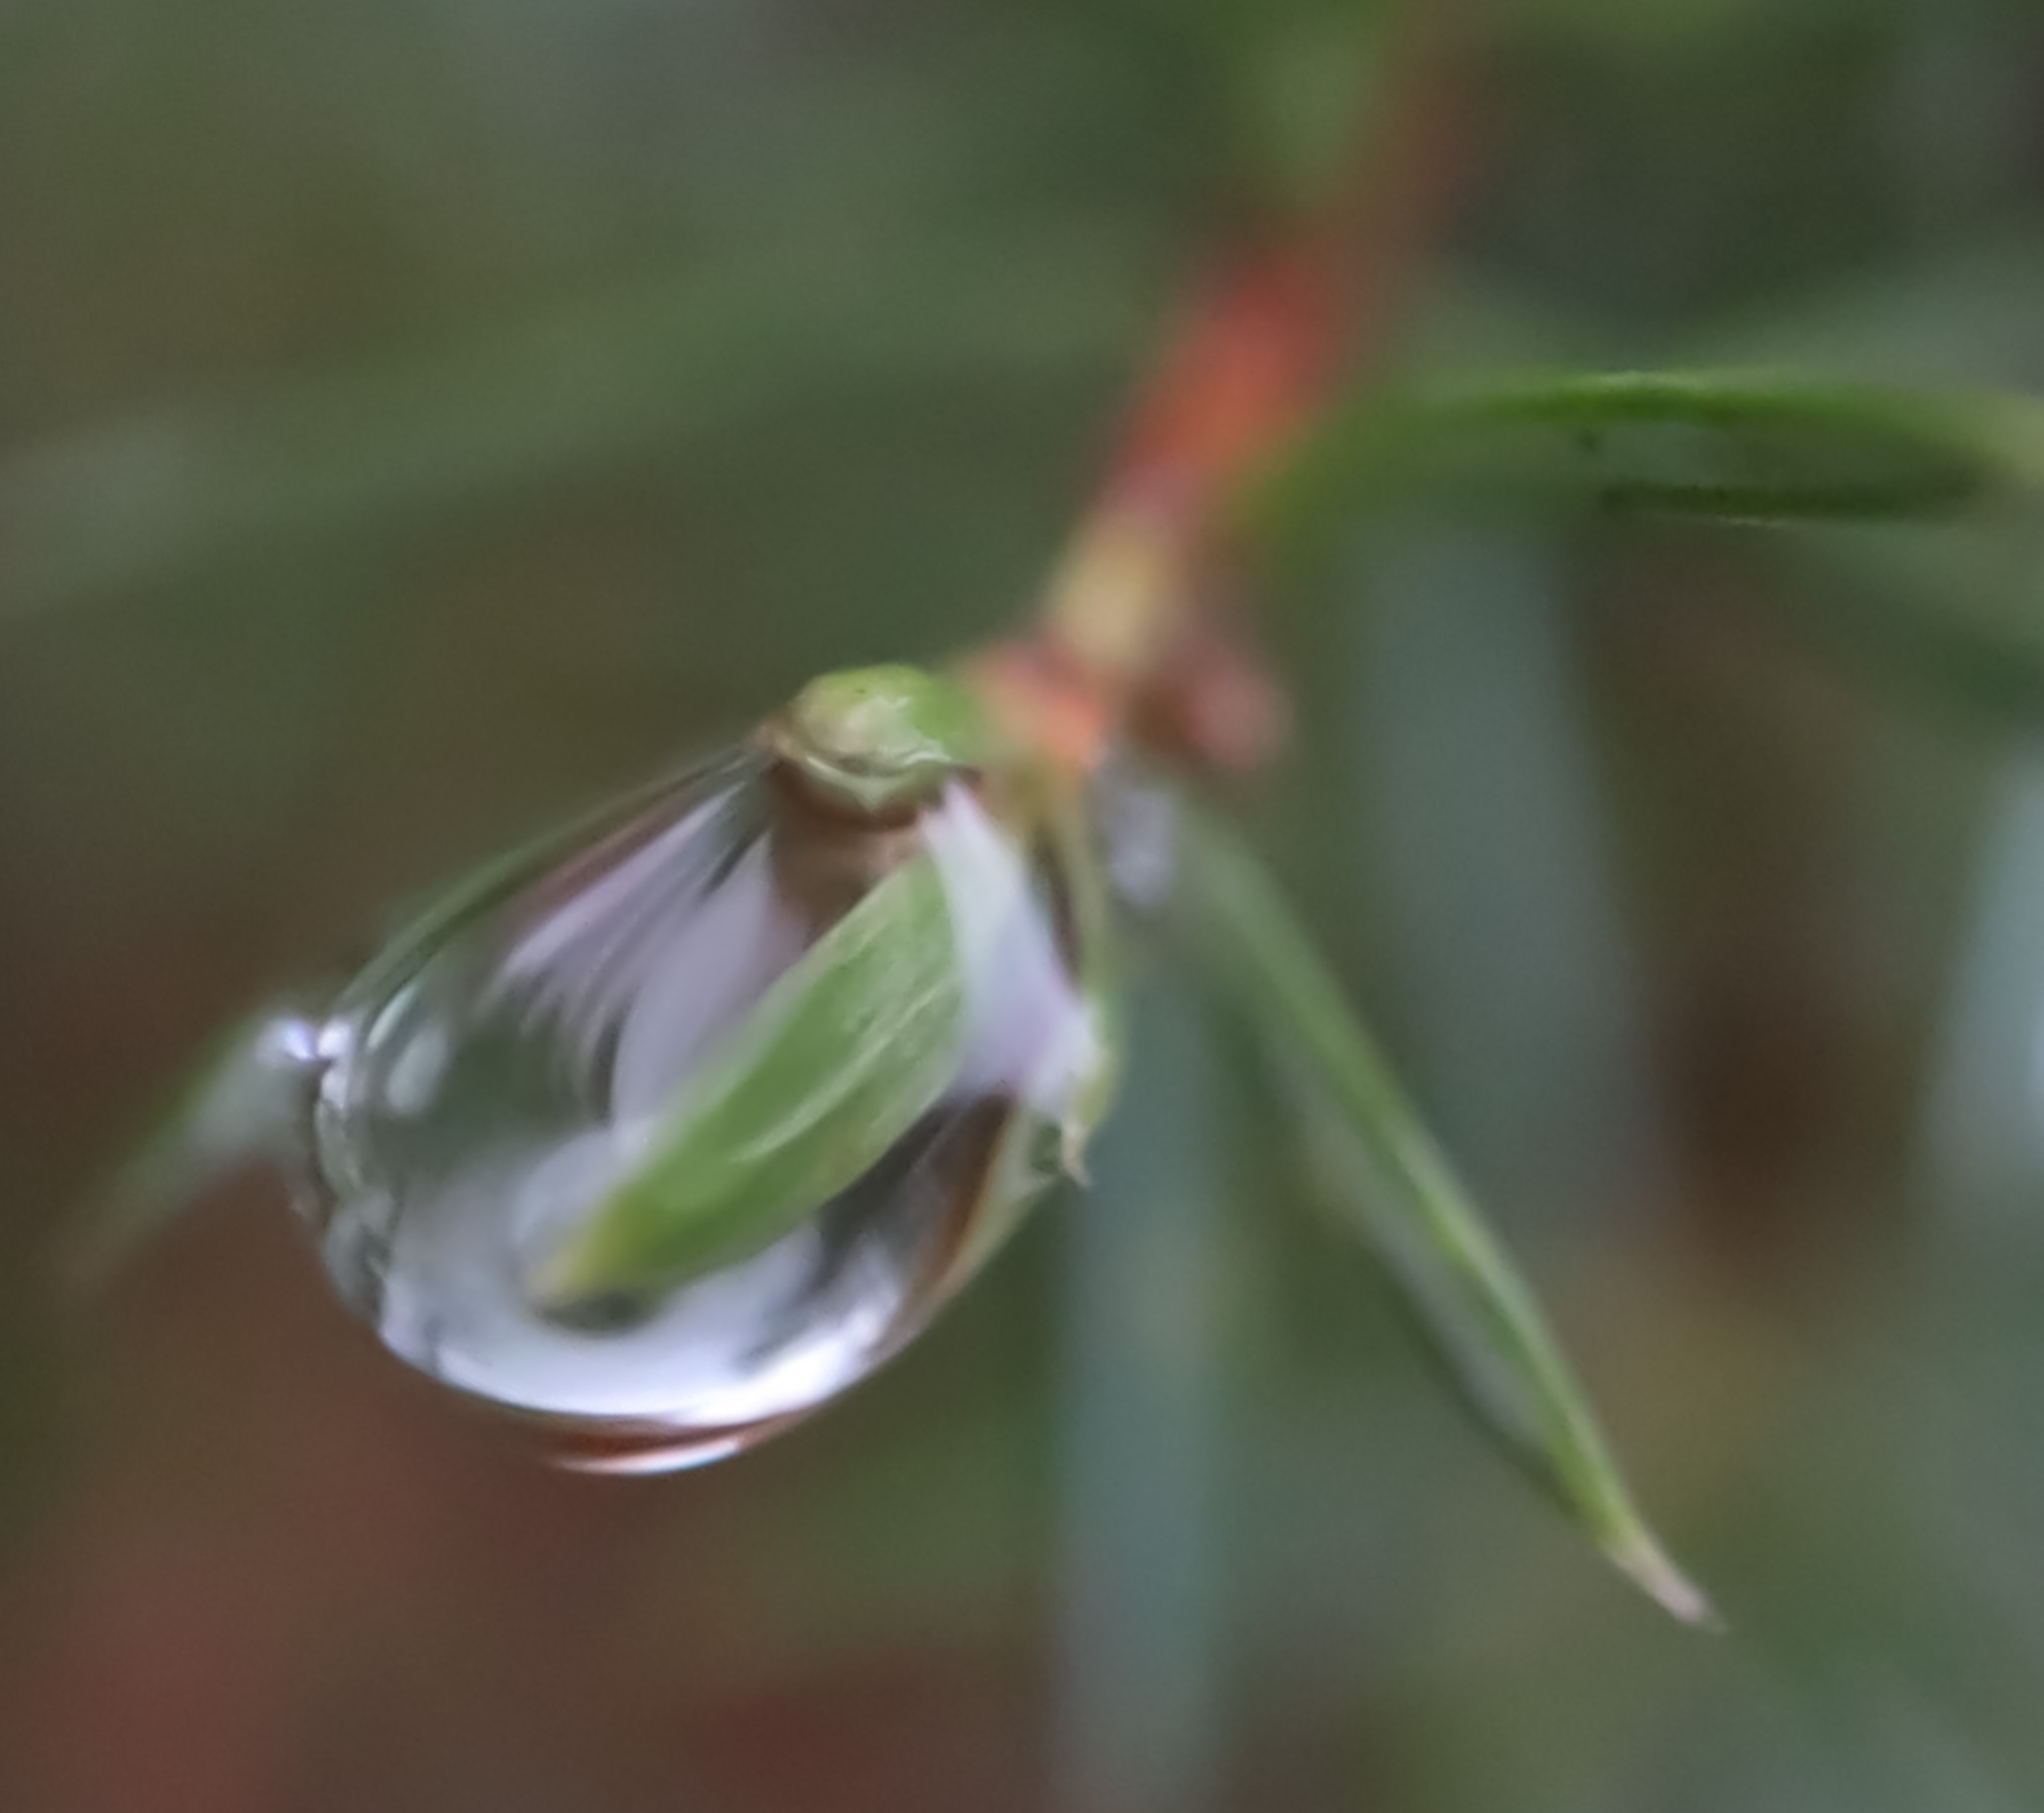 Pine drop